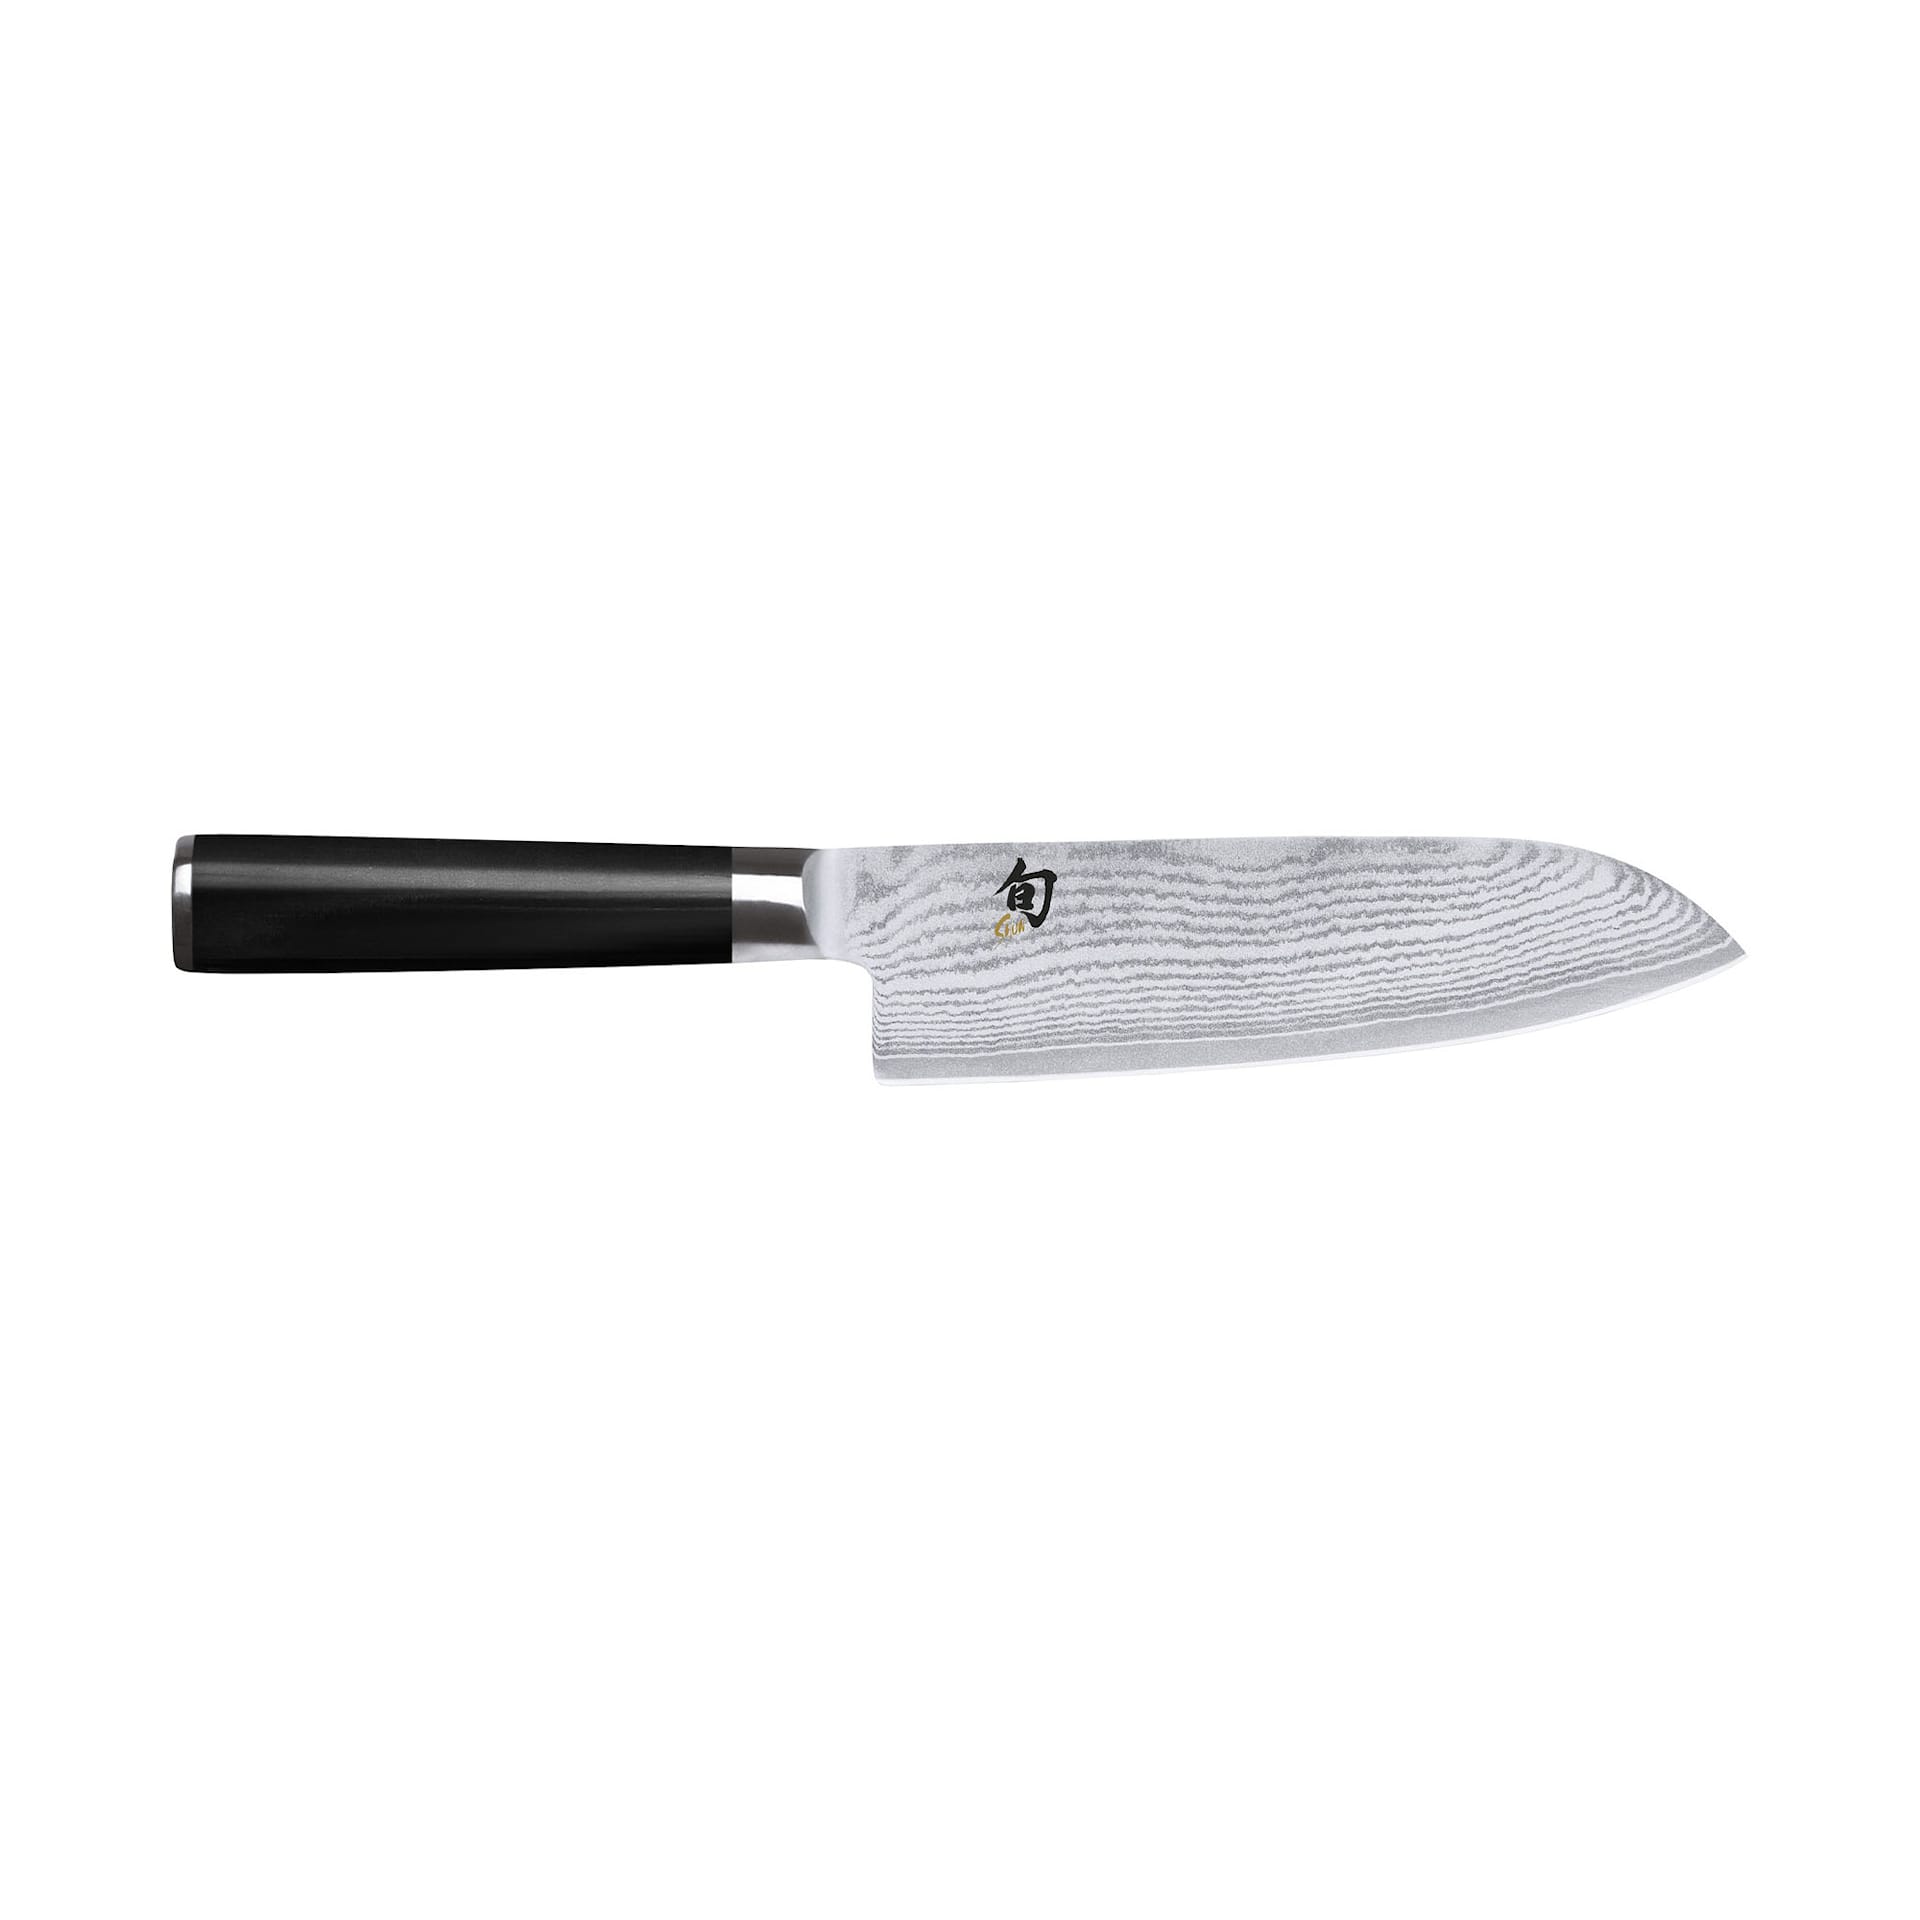 SHUN CLASSIC Santoku knife 18 cm, Black handle - KAI - NO GA